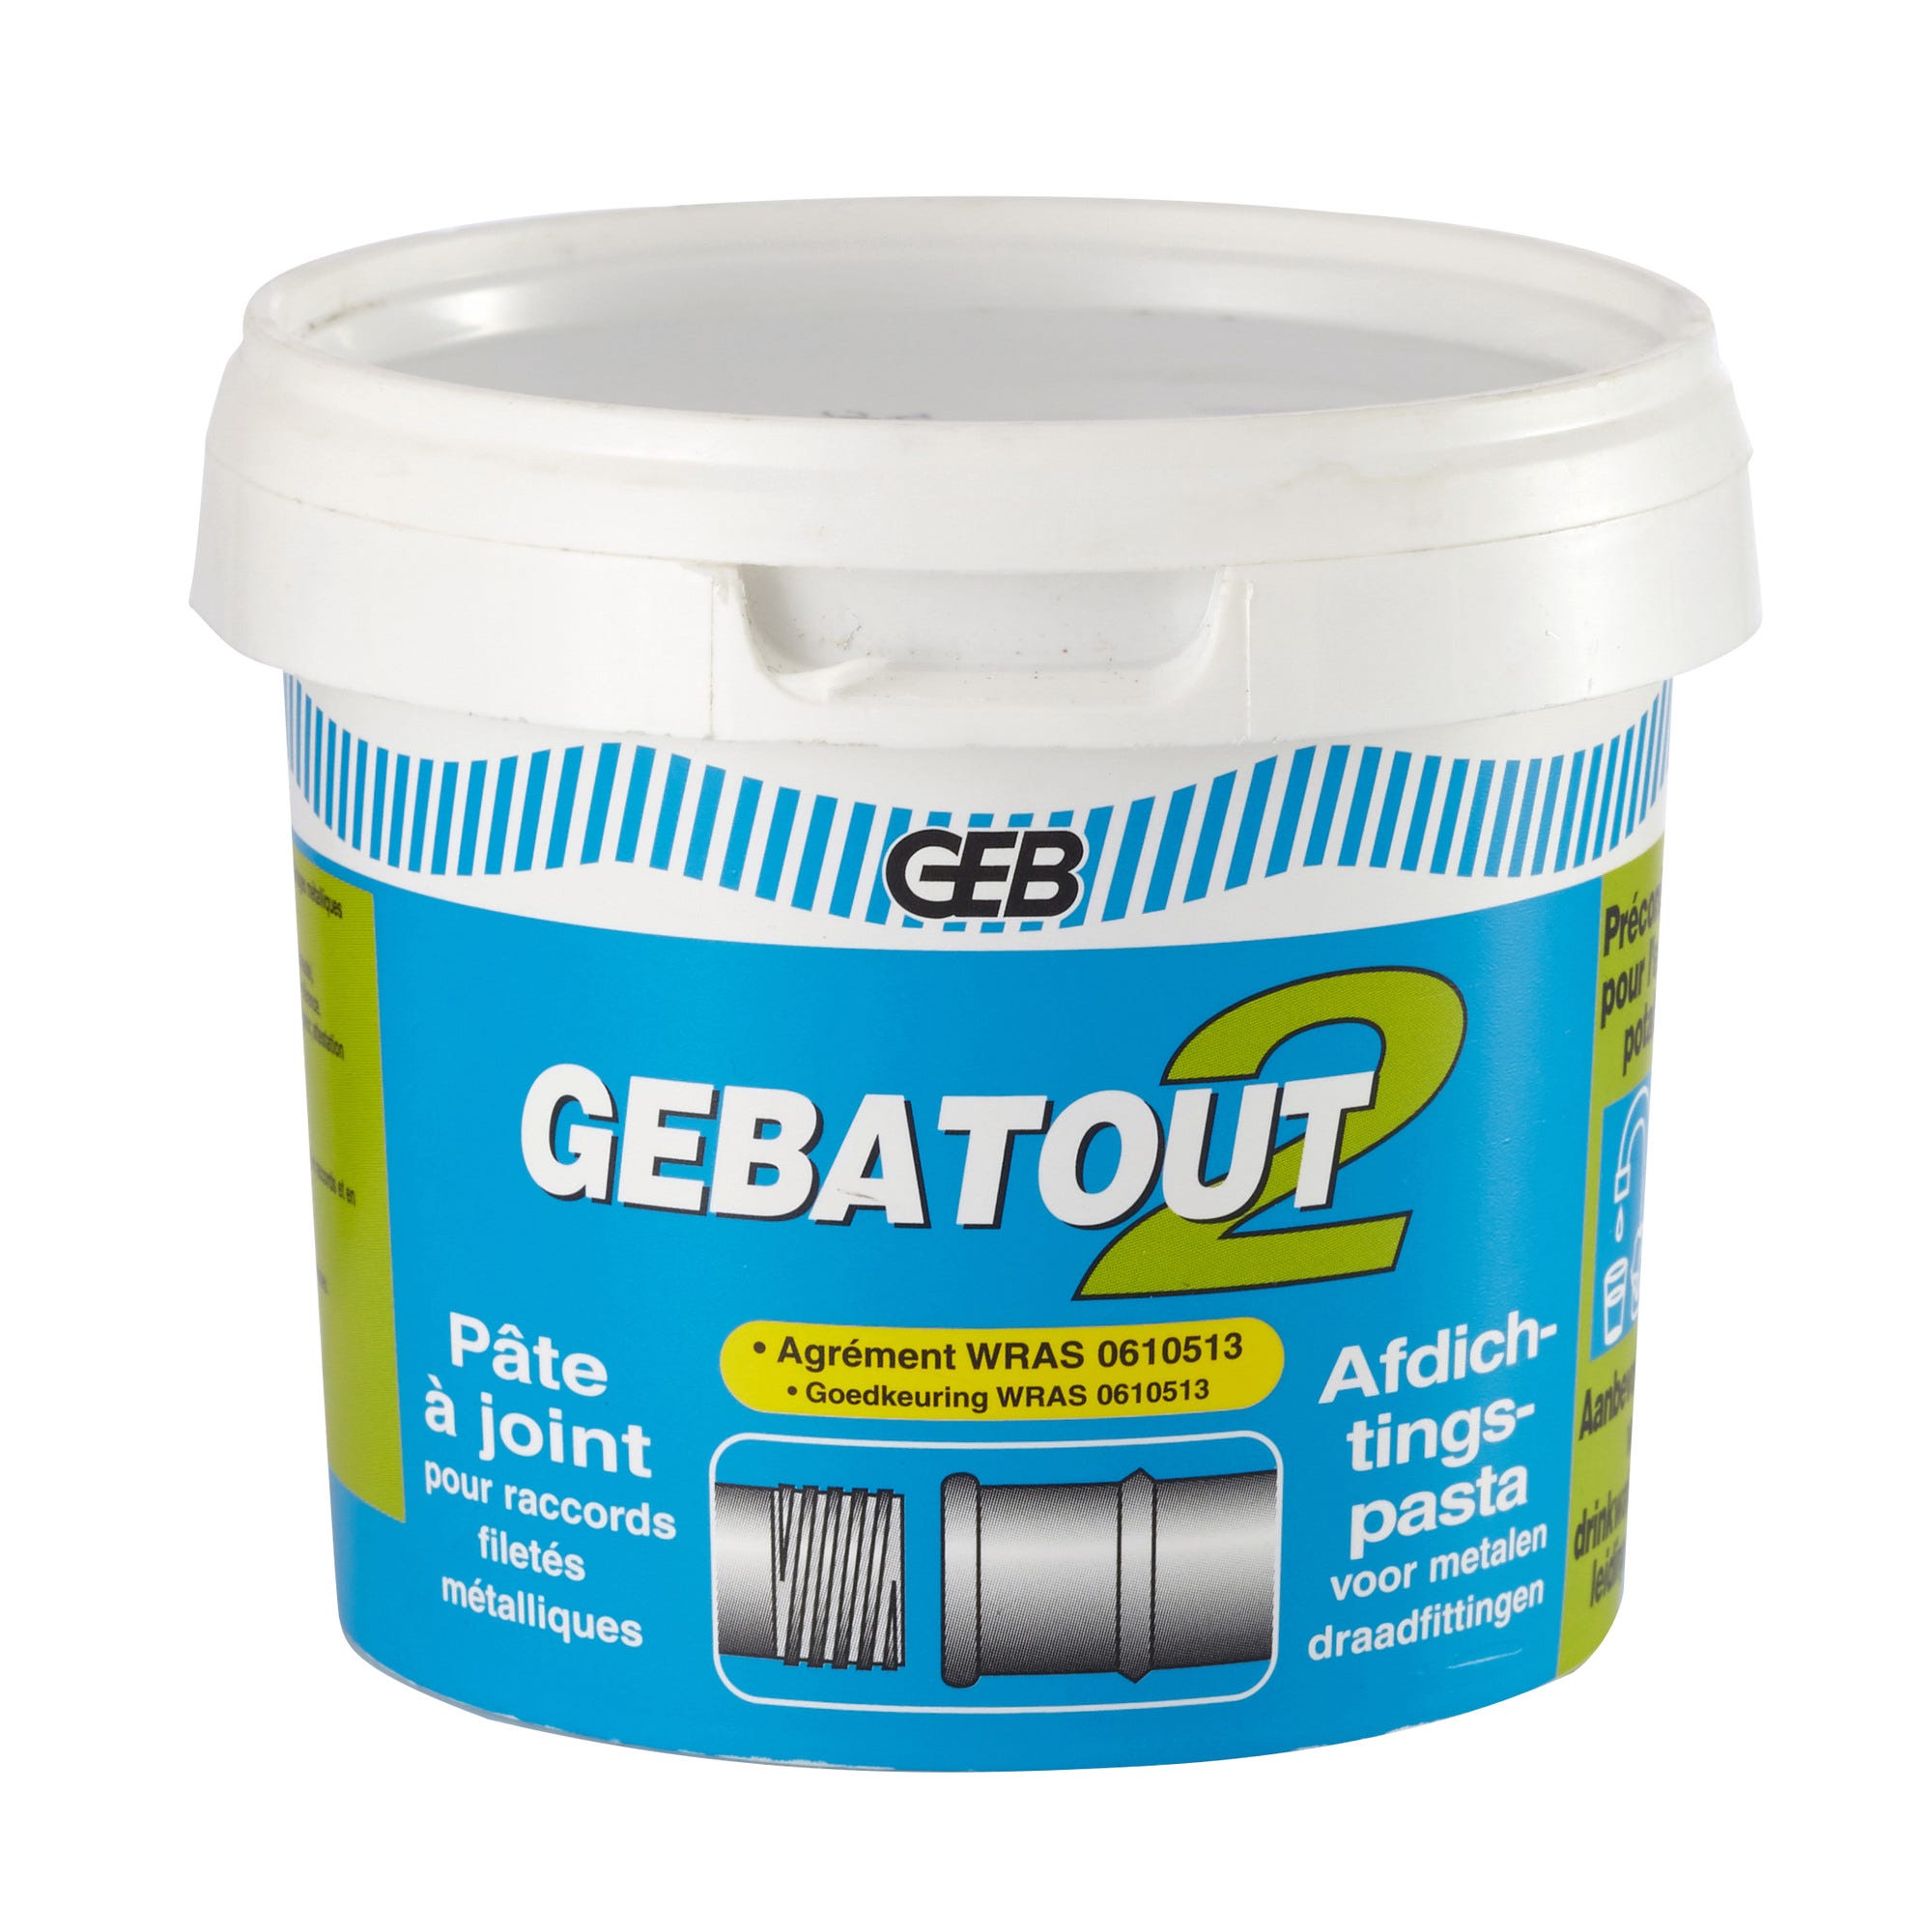 Pâte à joint 500 g Gebatout 2 - GEB 0